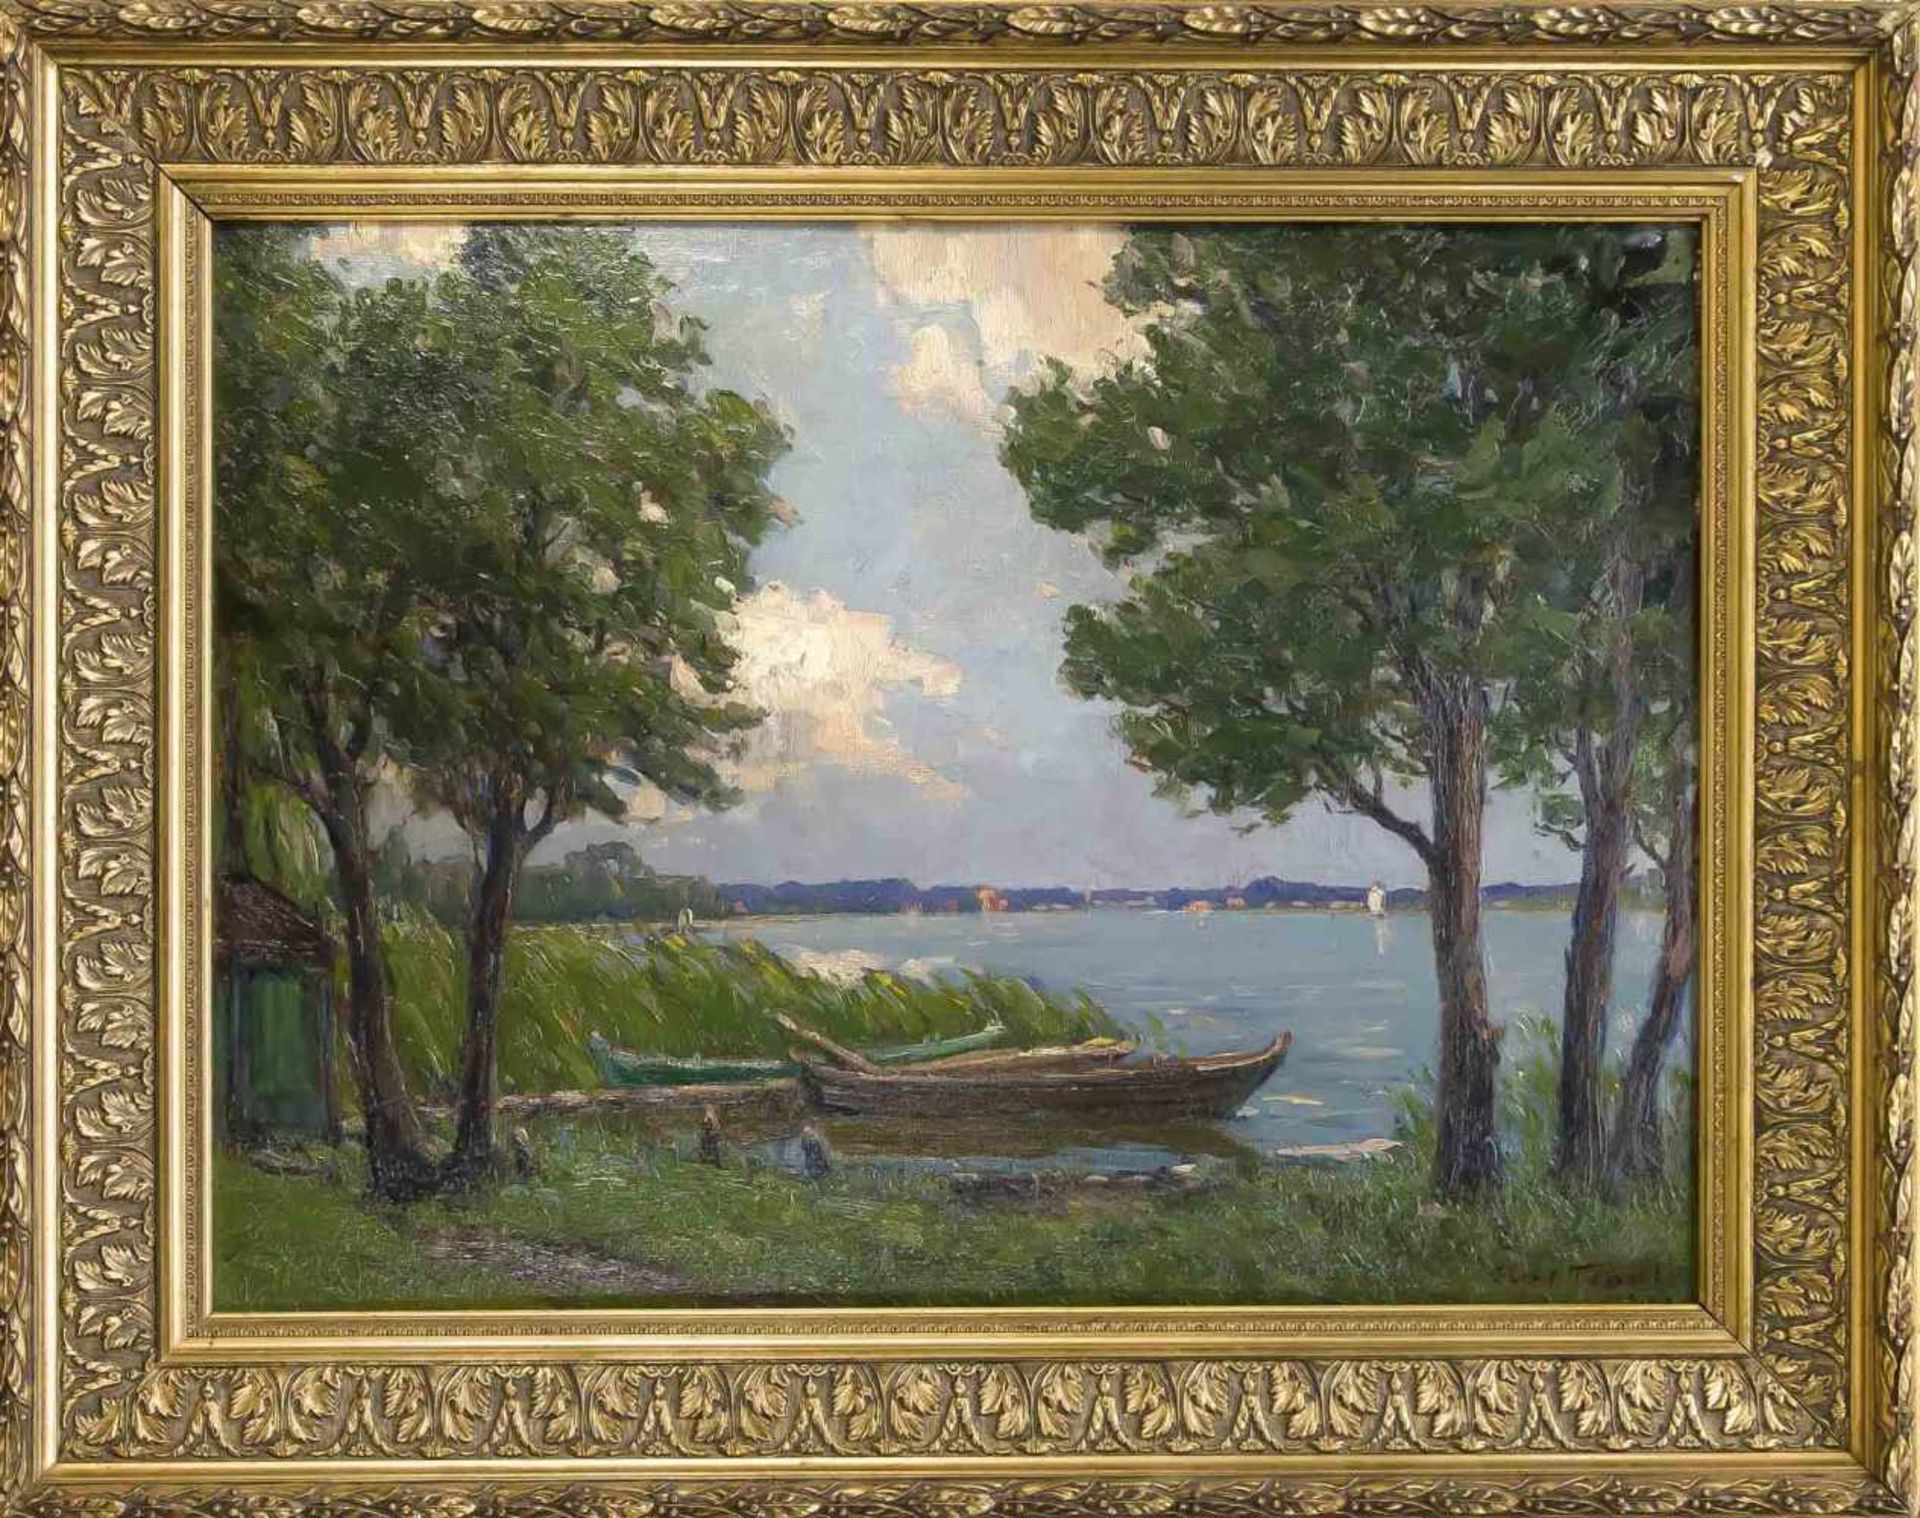 Curt Topel (1865-1946), Landschaftsmaler u. Graphiker, std. a.d. Berliner Akademie, lebtein